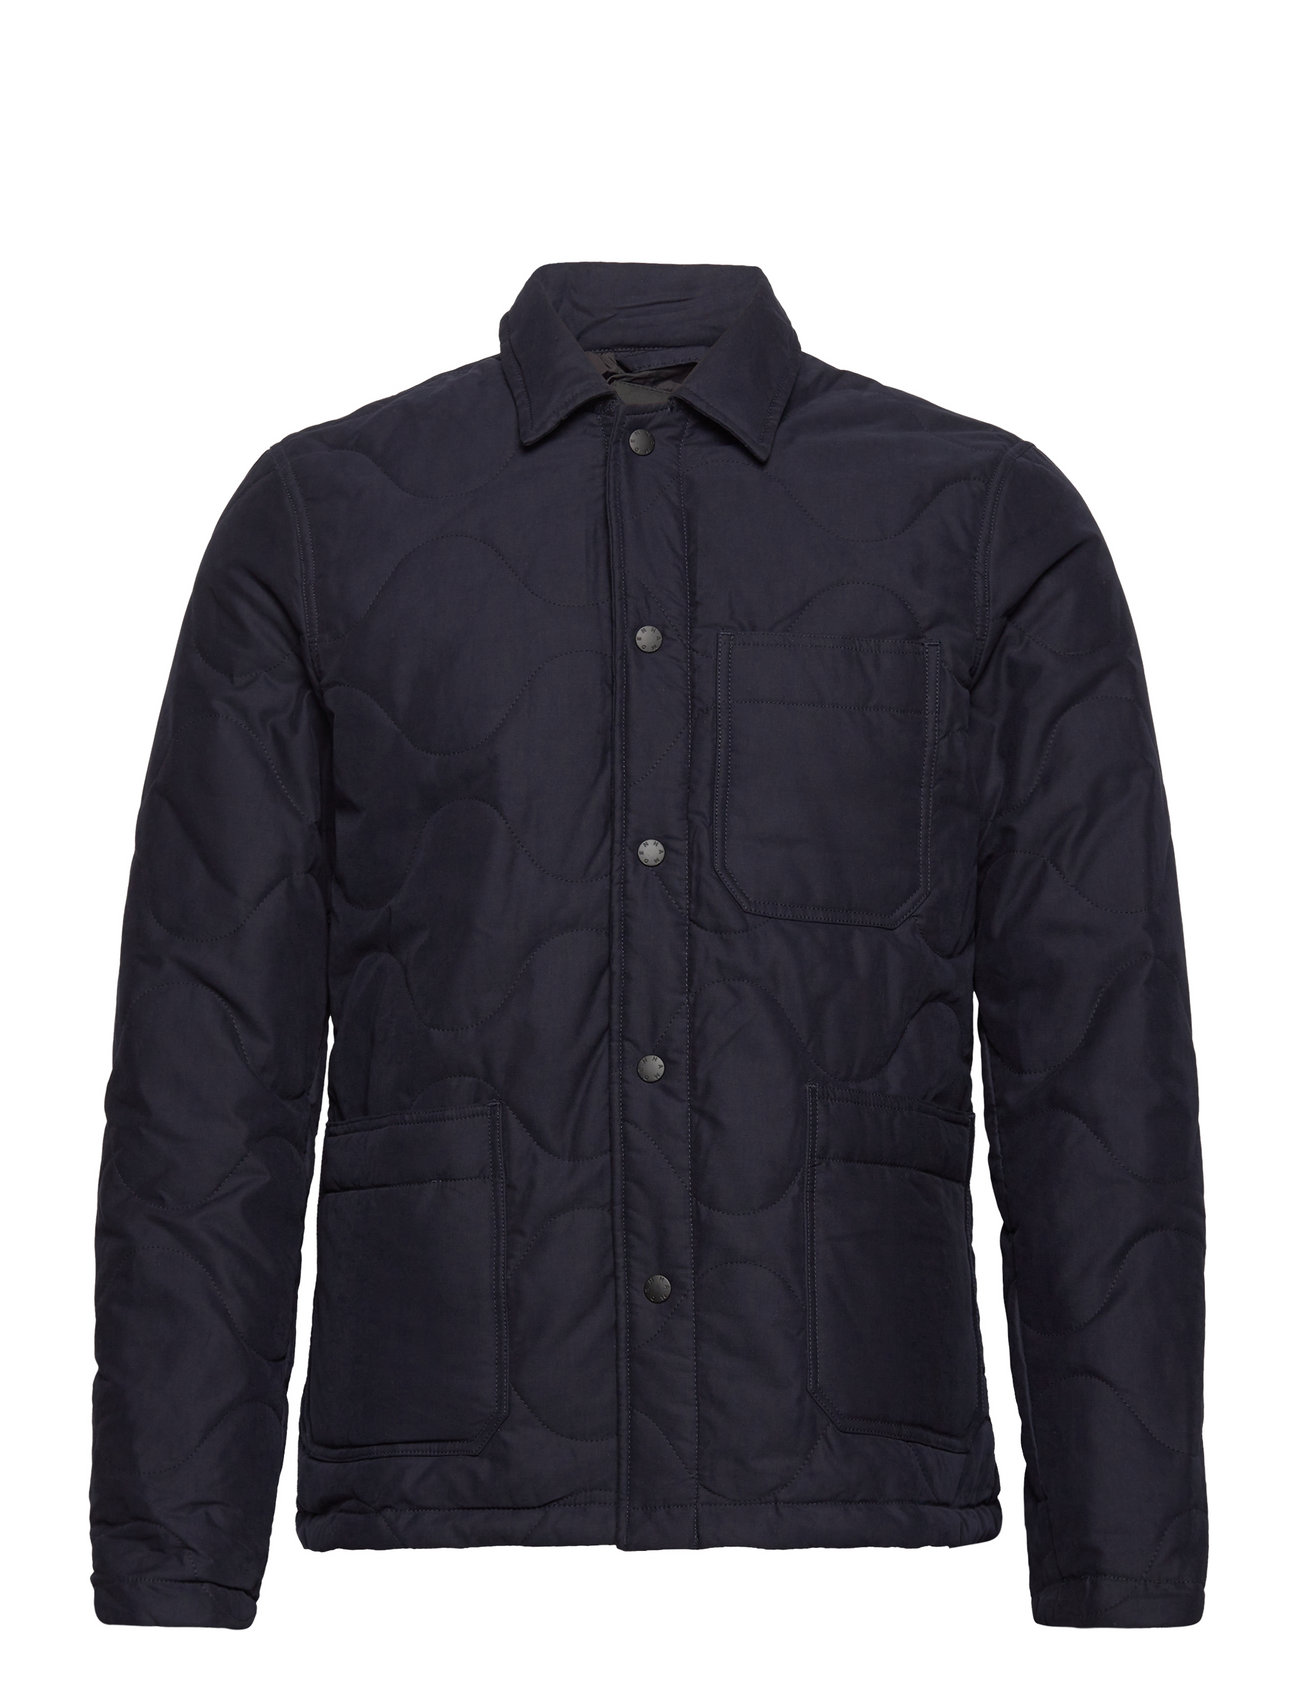 Denham Mao Quilted Jacket - 88 €. Buy Quilted jackets from Denham ...